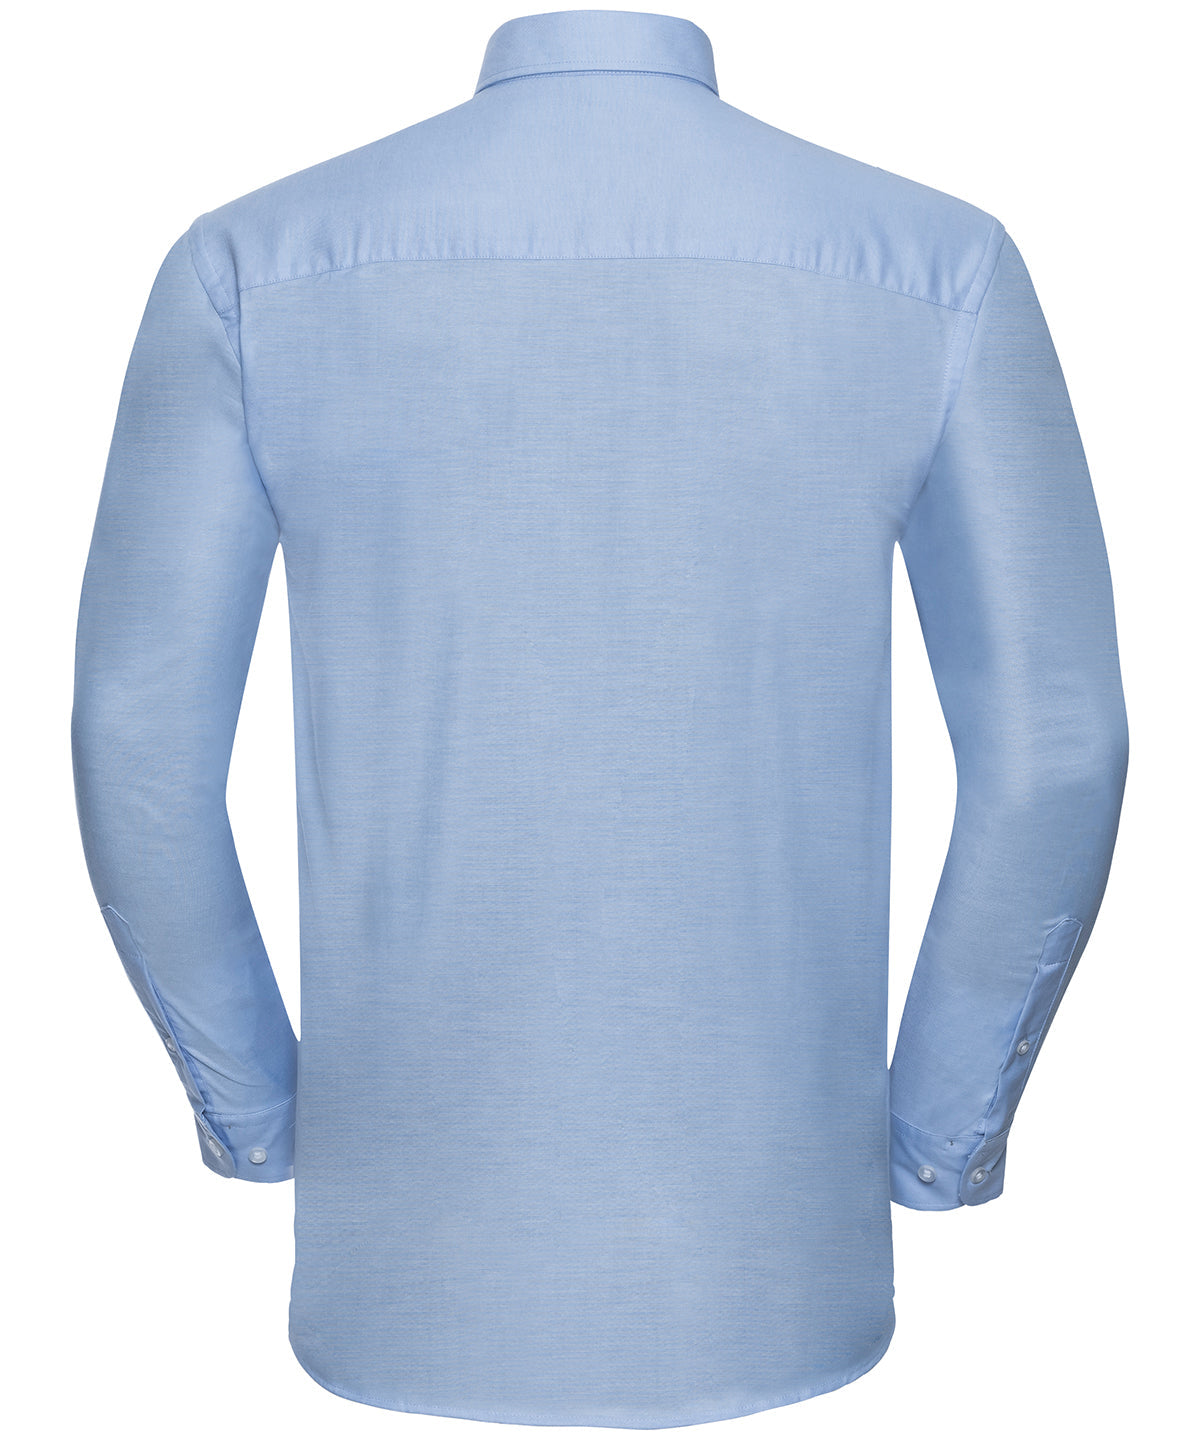 Oxford style Velcro shirt